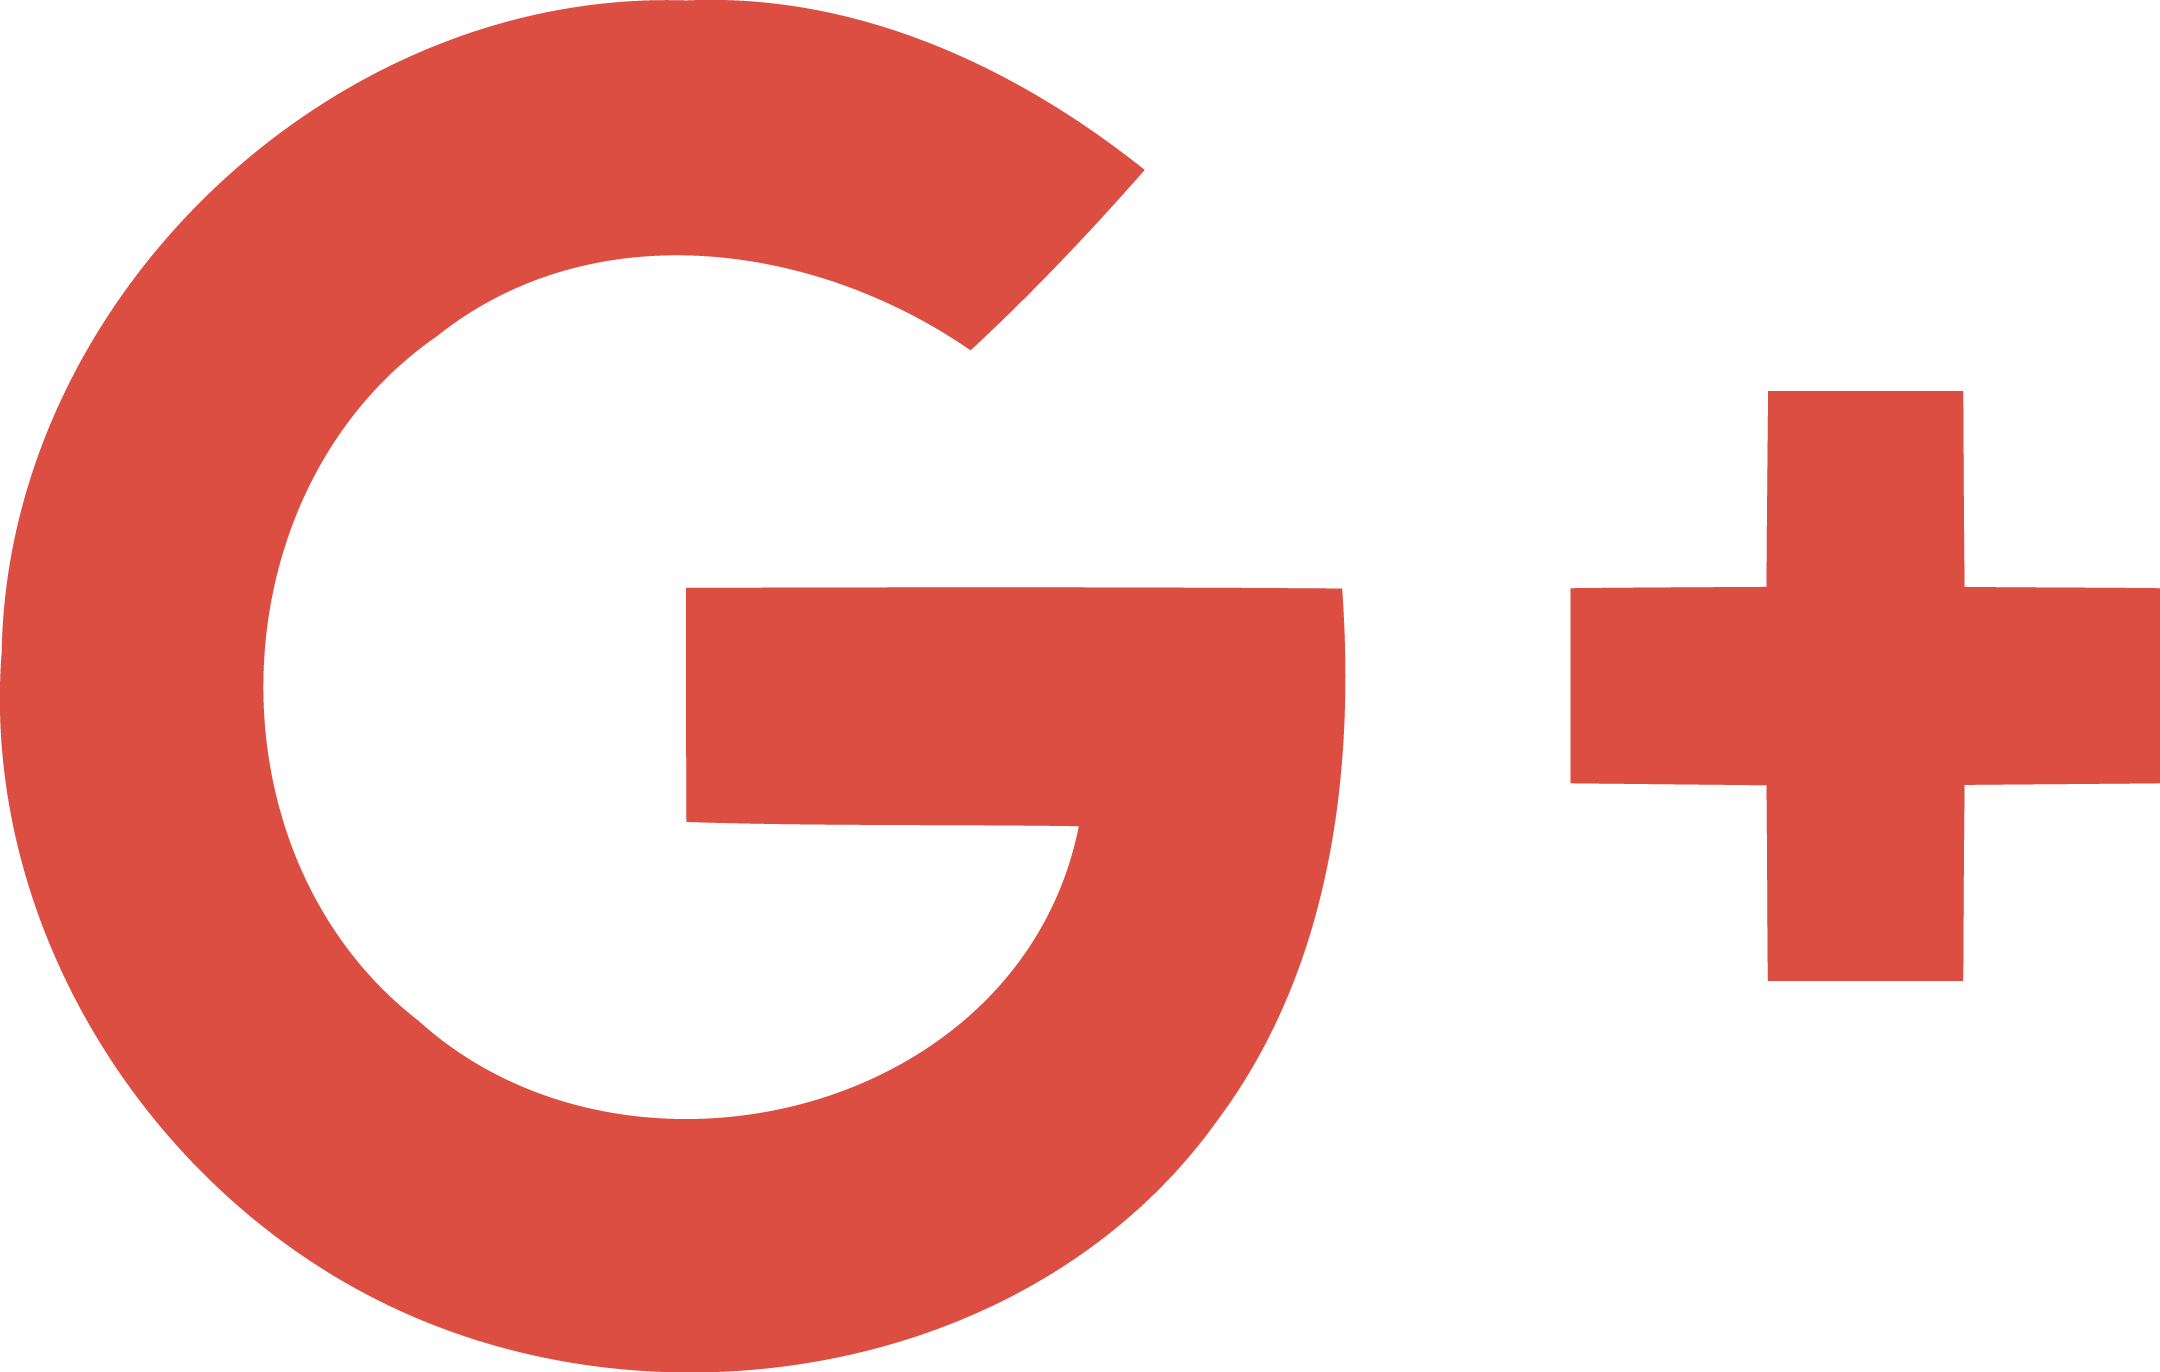 Google Plus Logo Icon png